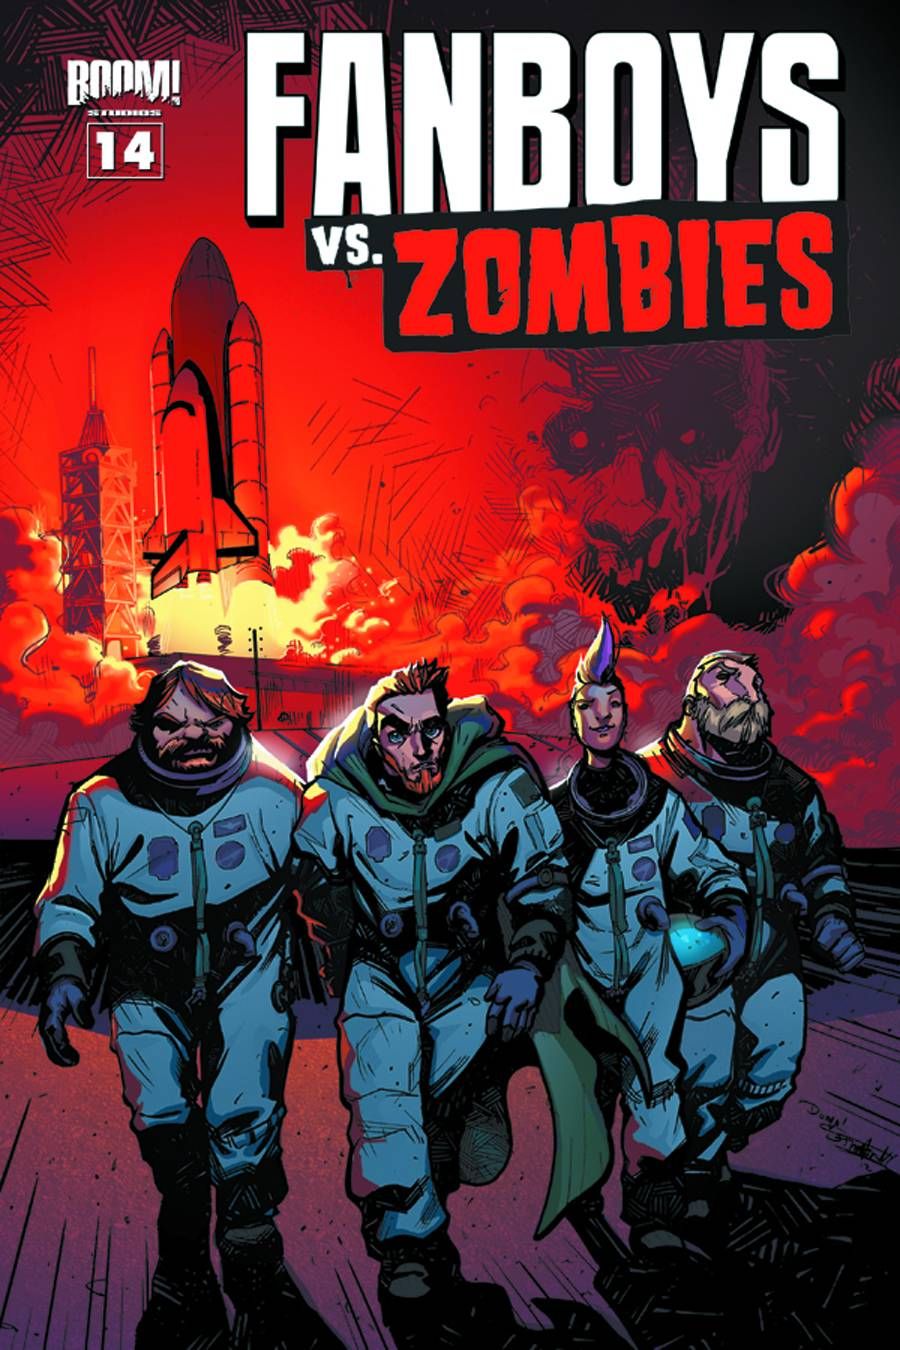 Fanboys vs Zombies #14 Comic